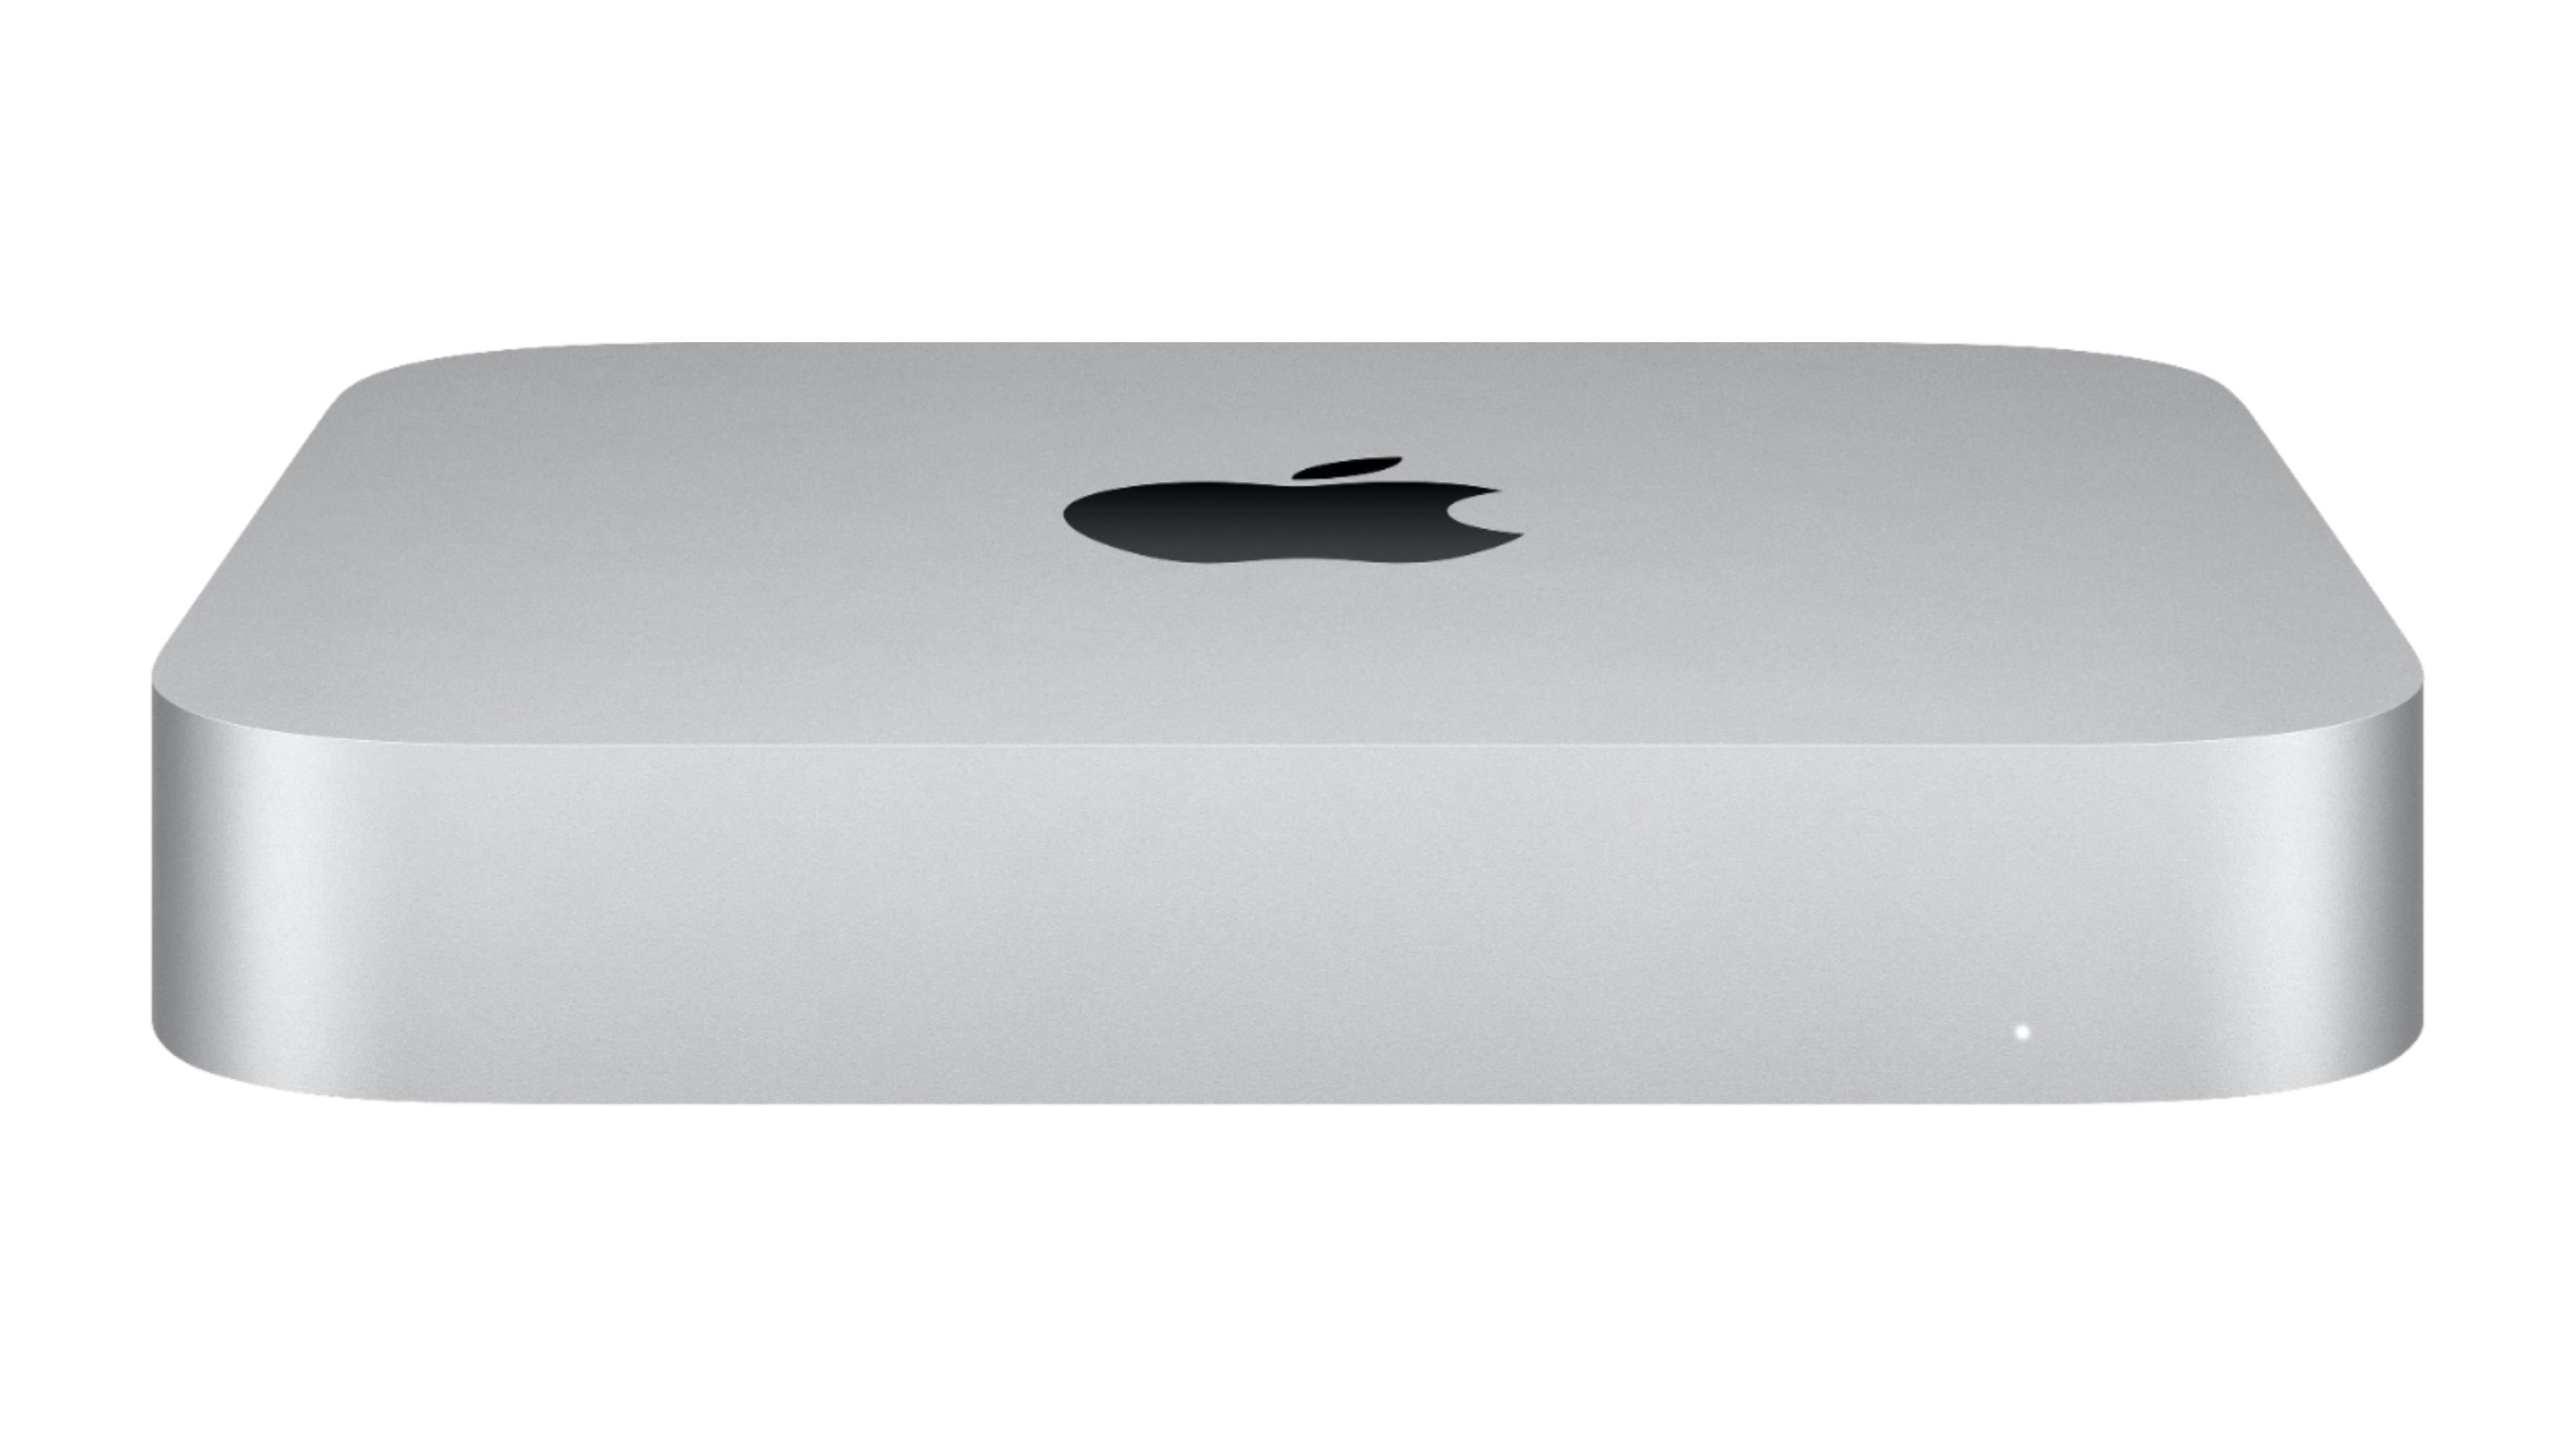 Mac mini (M1, 2020) against a white background